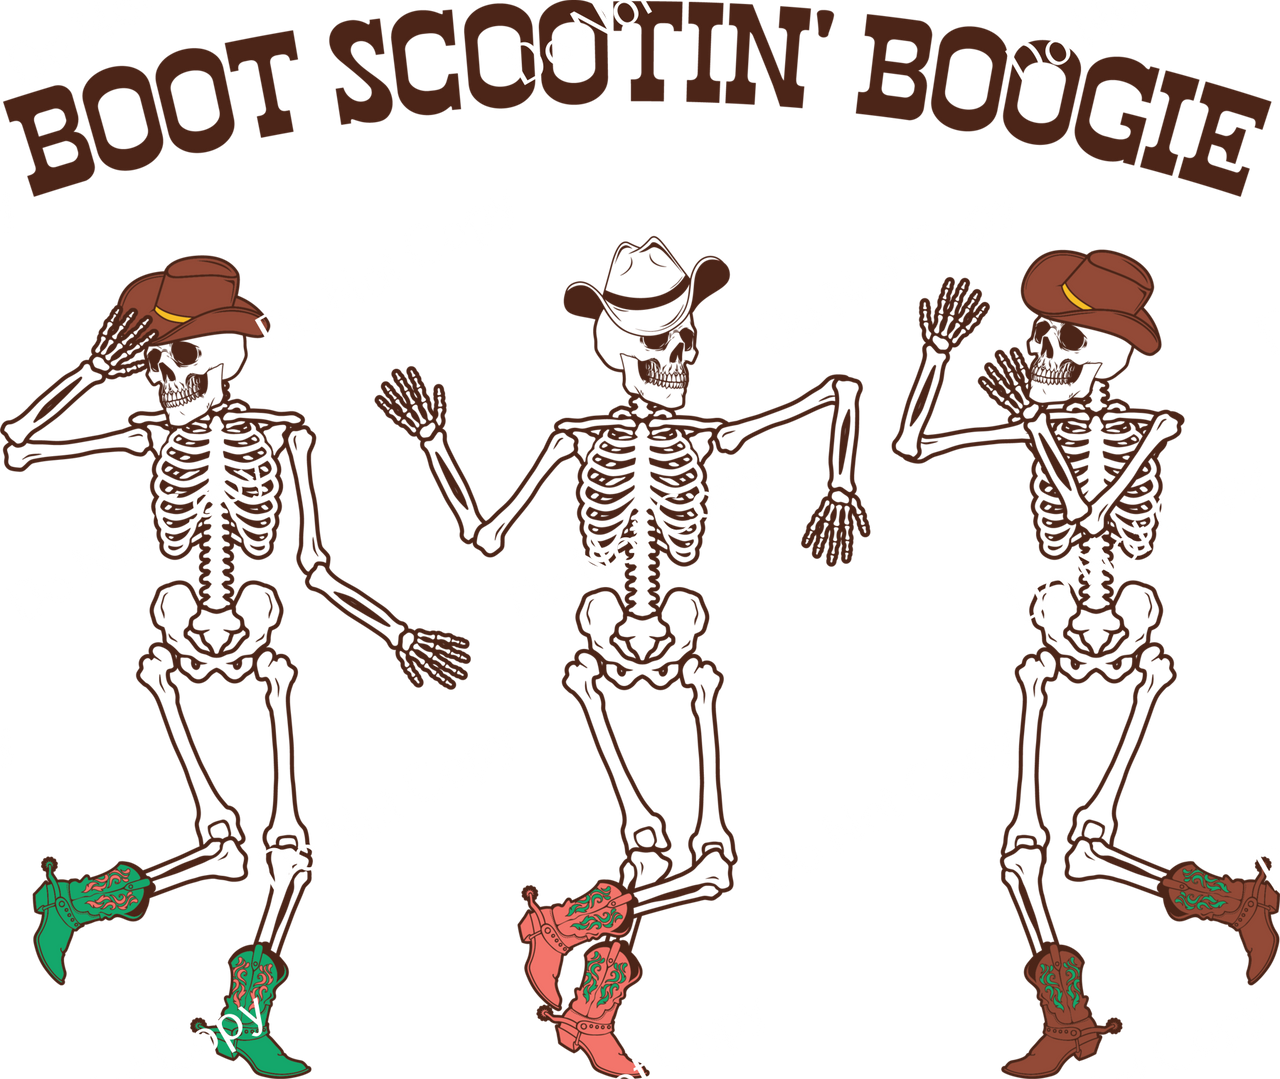 ColorSplash Ultra | Boot Scootin Boogie CF